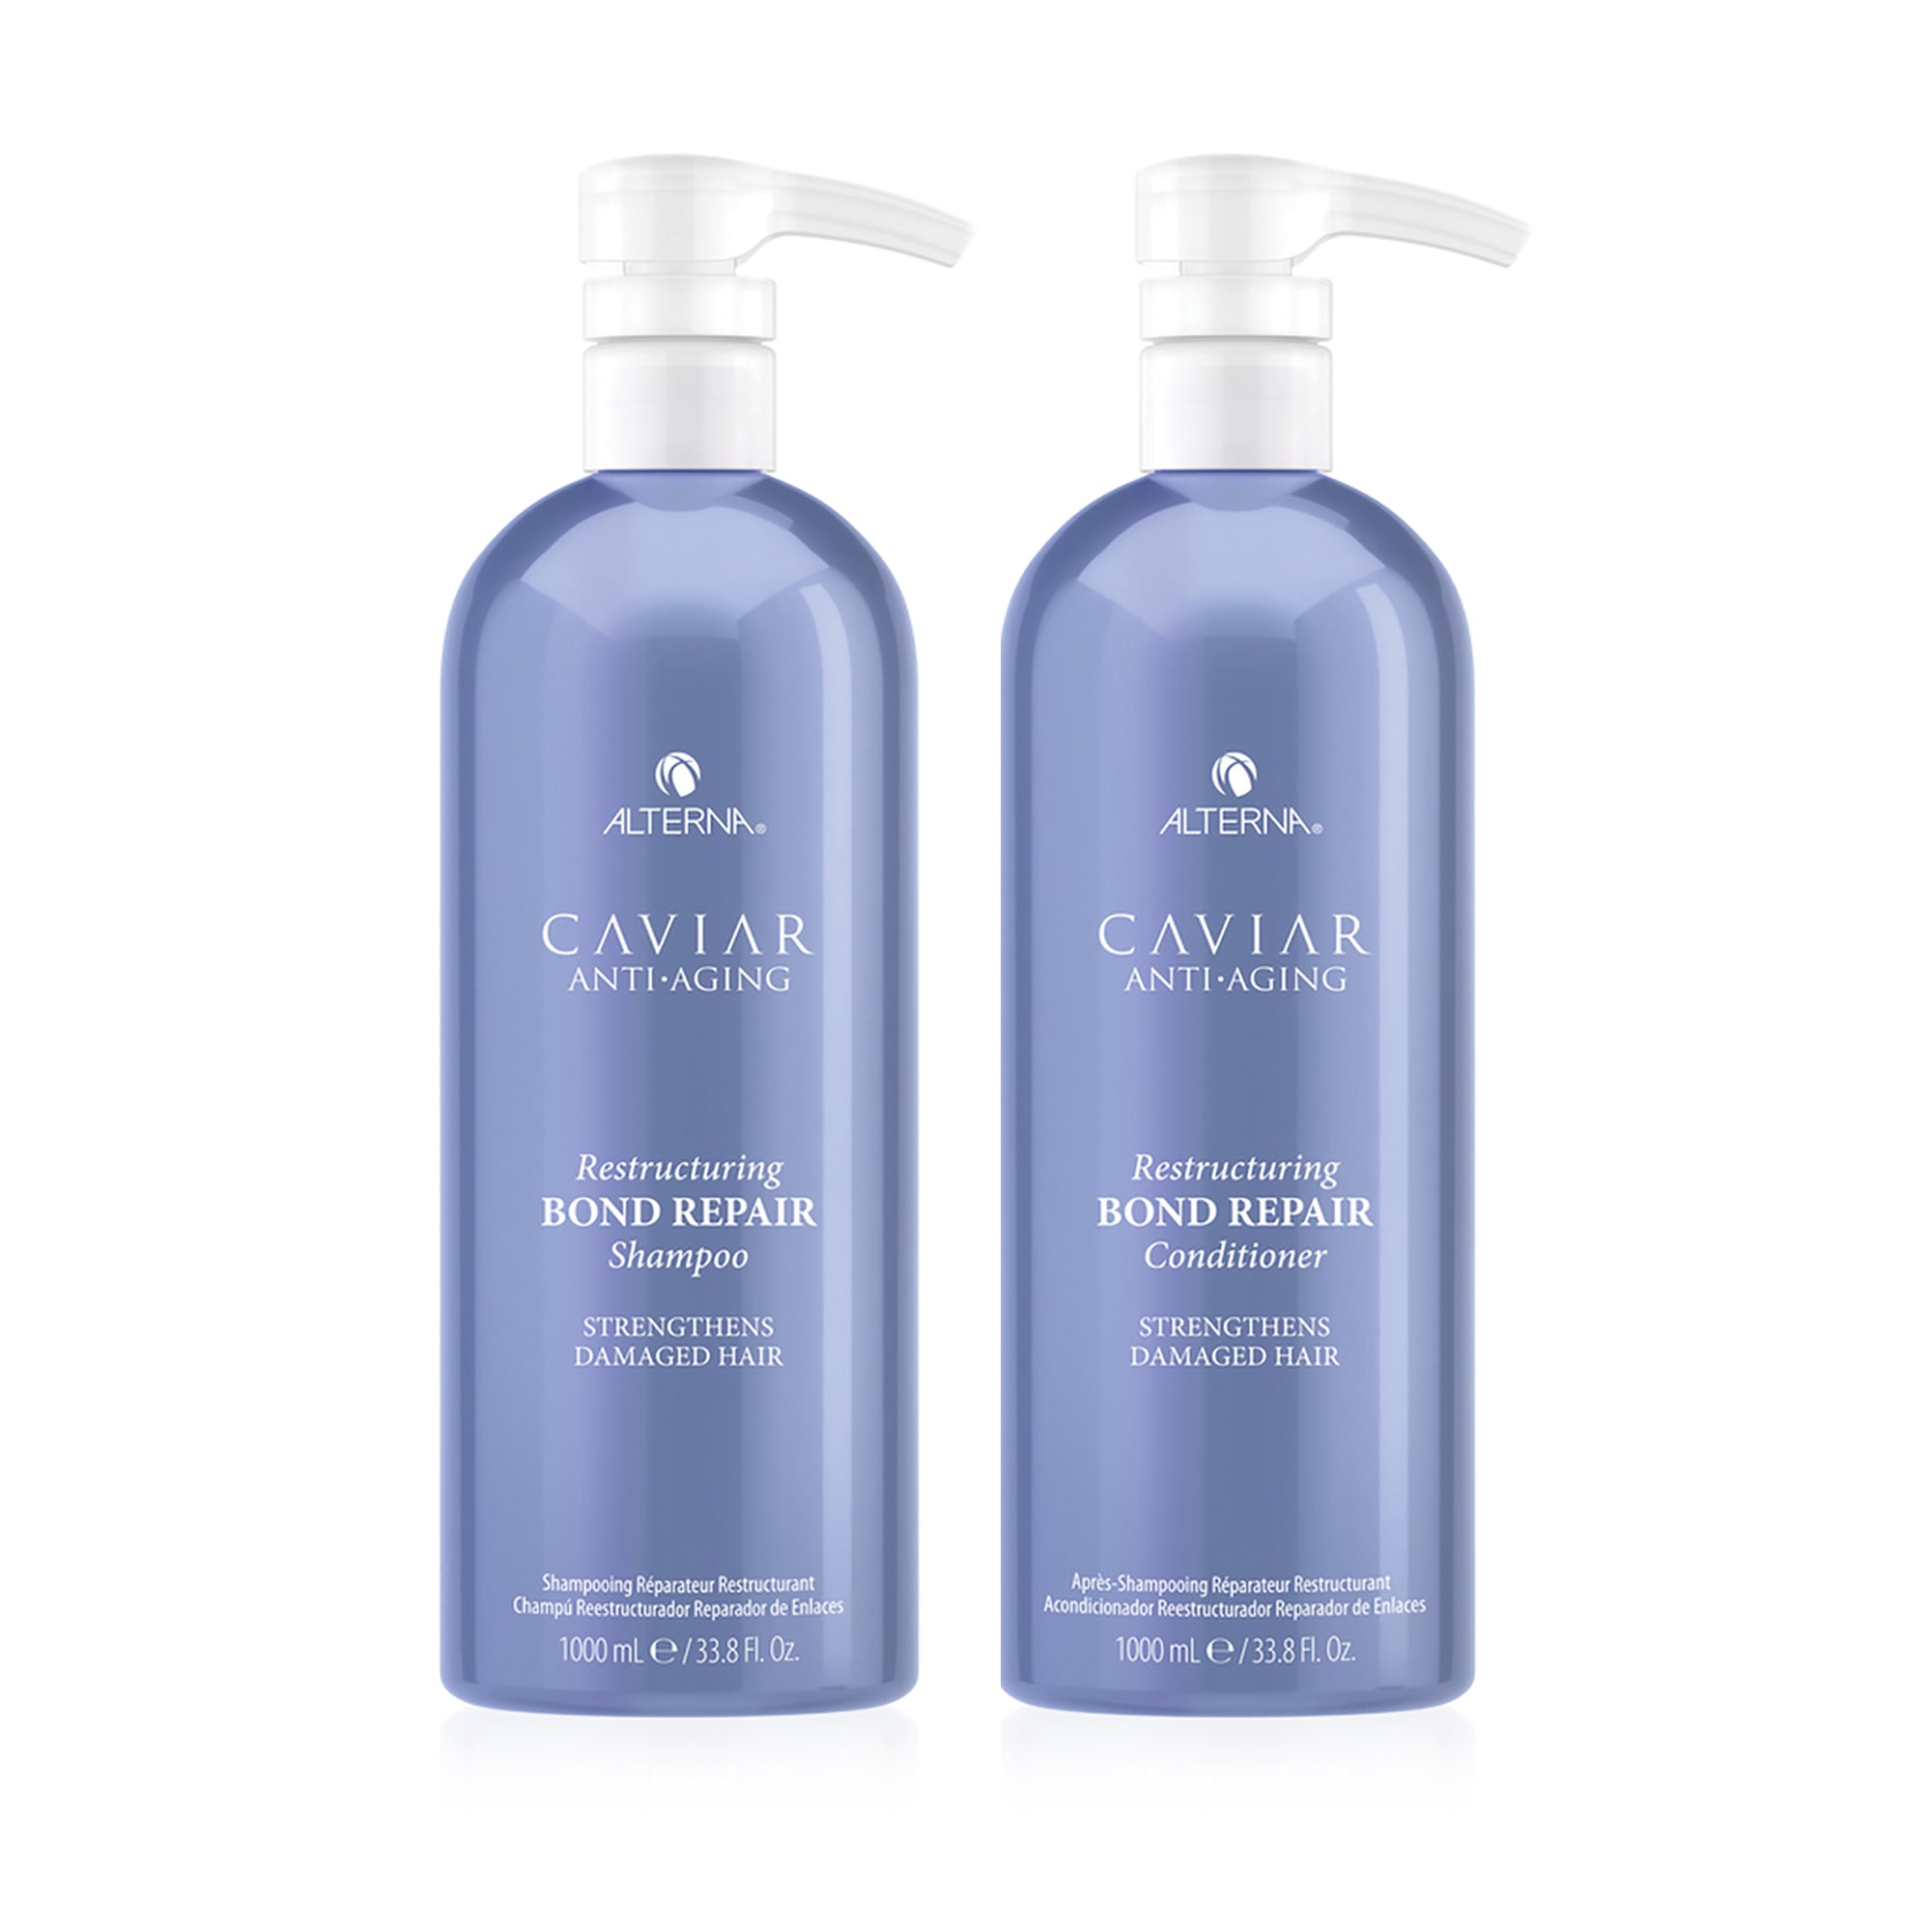 Alterna Caviar Anti-Aging Restructuring Bond Repair Shampoo and Conditioner Liter Duo / 33.8OZ